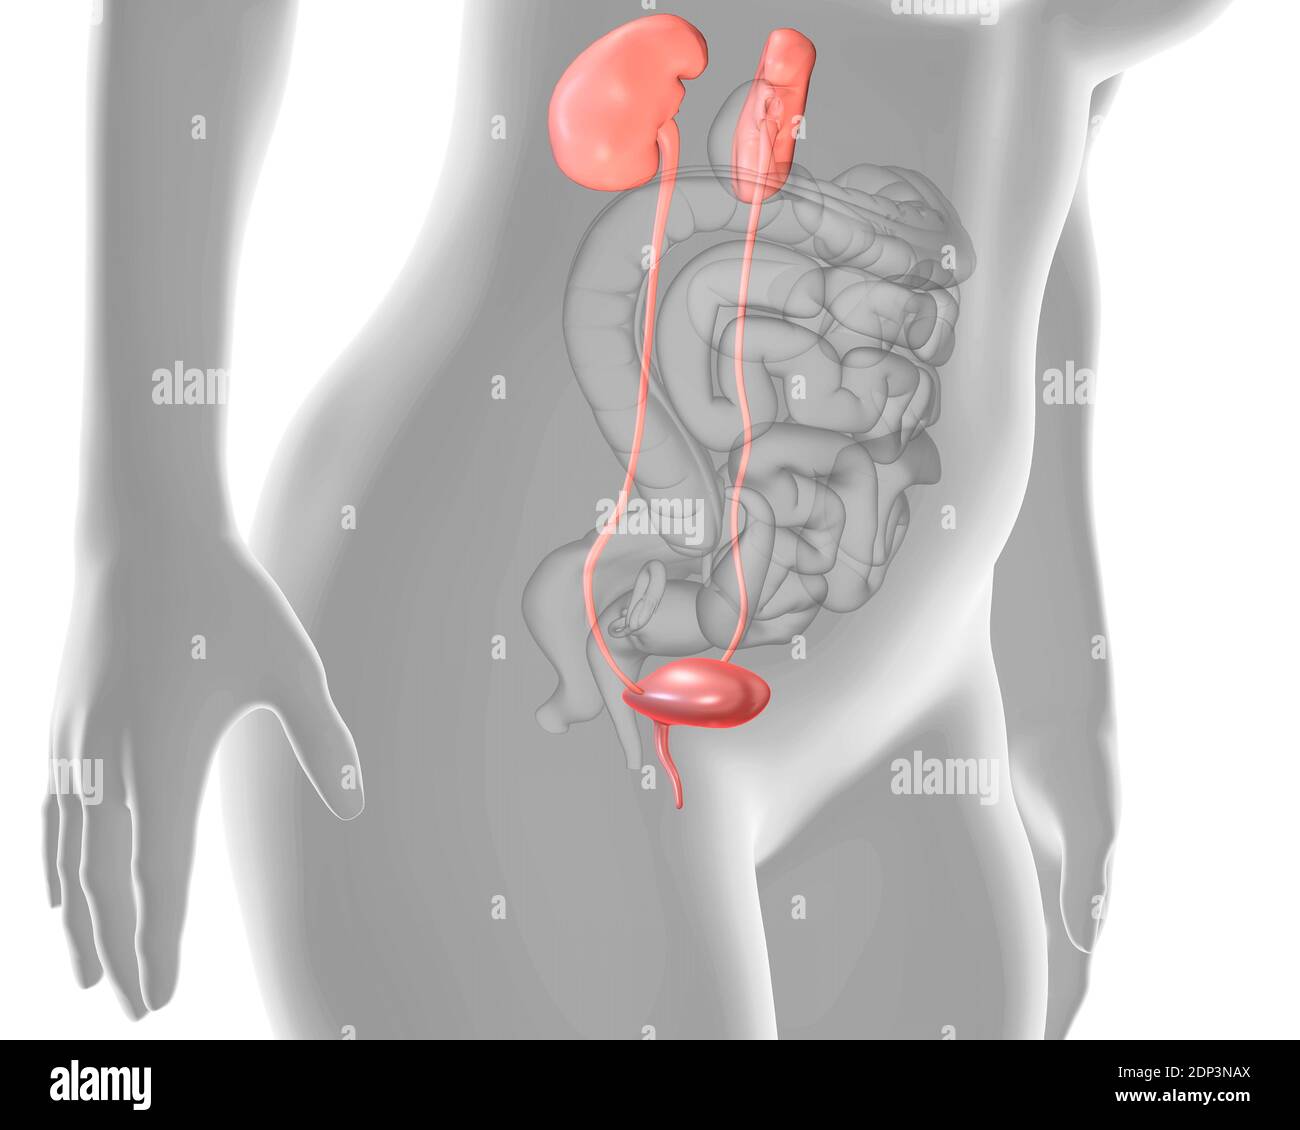 Female urinary system, illustration. Stock Photo